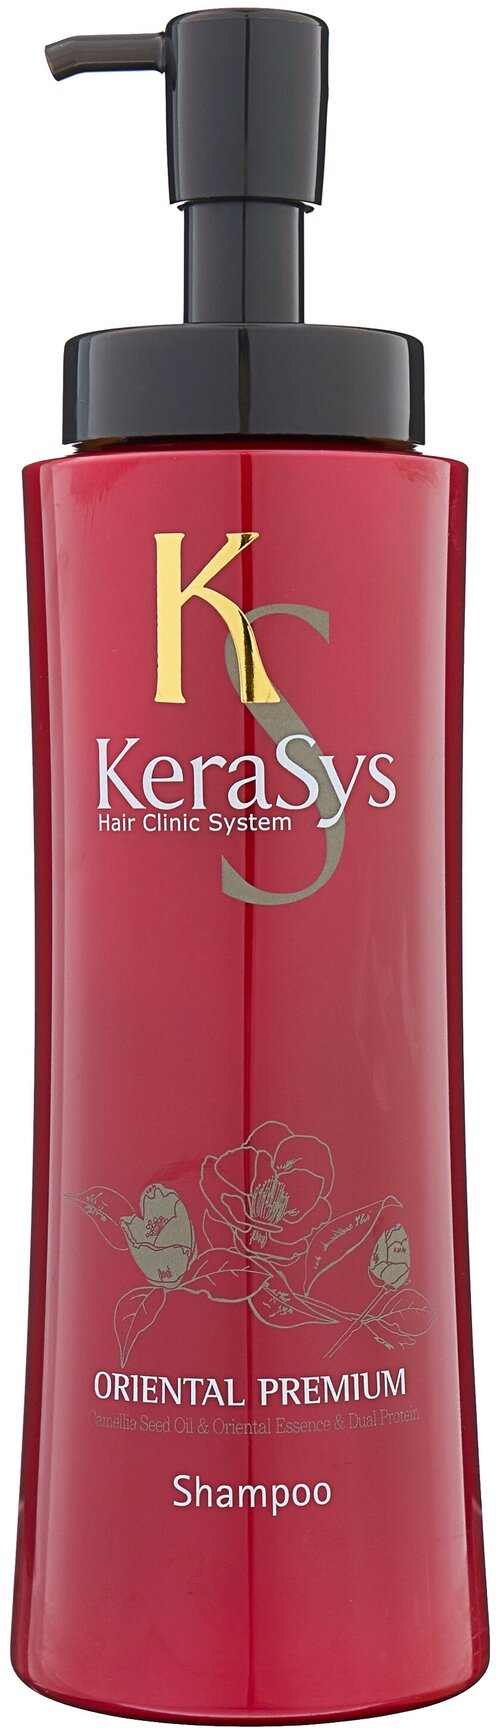 KeraSys шампунь Oriental Premium, 600 мл